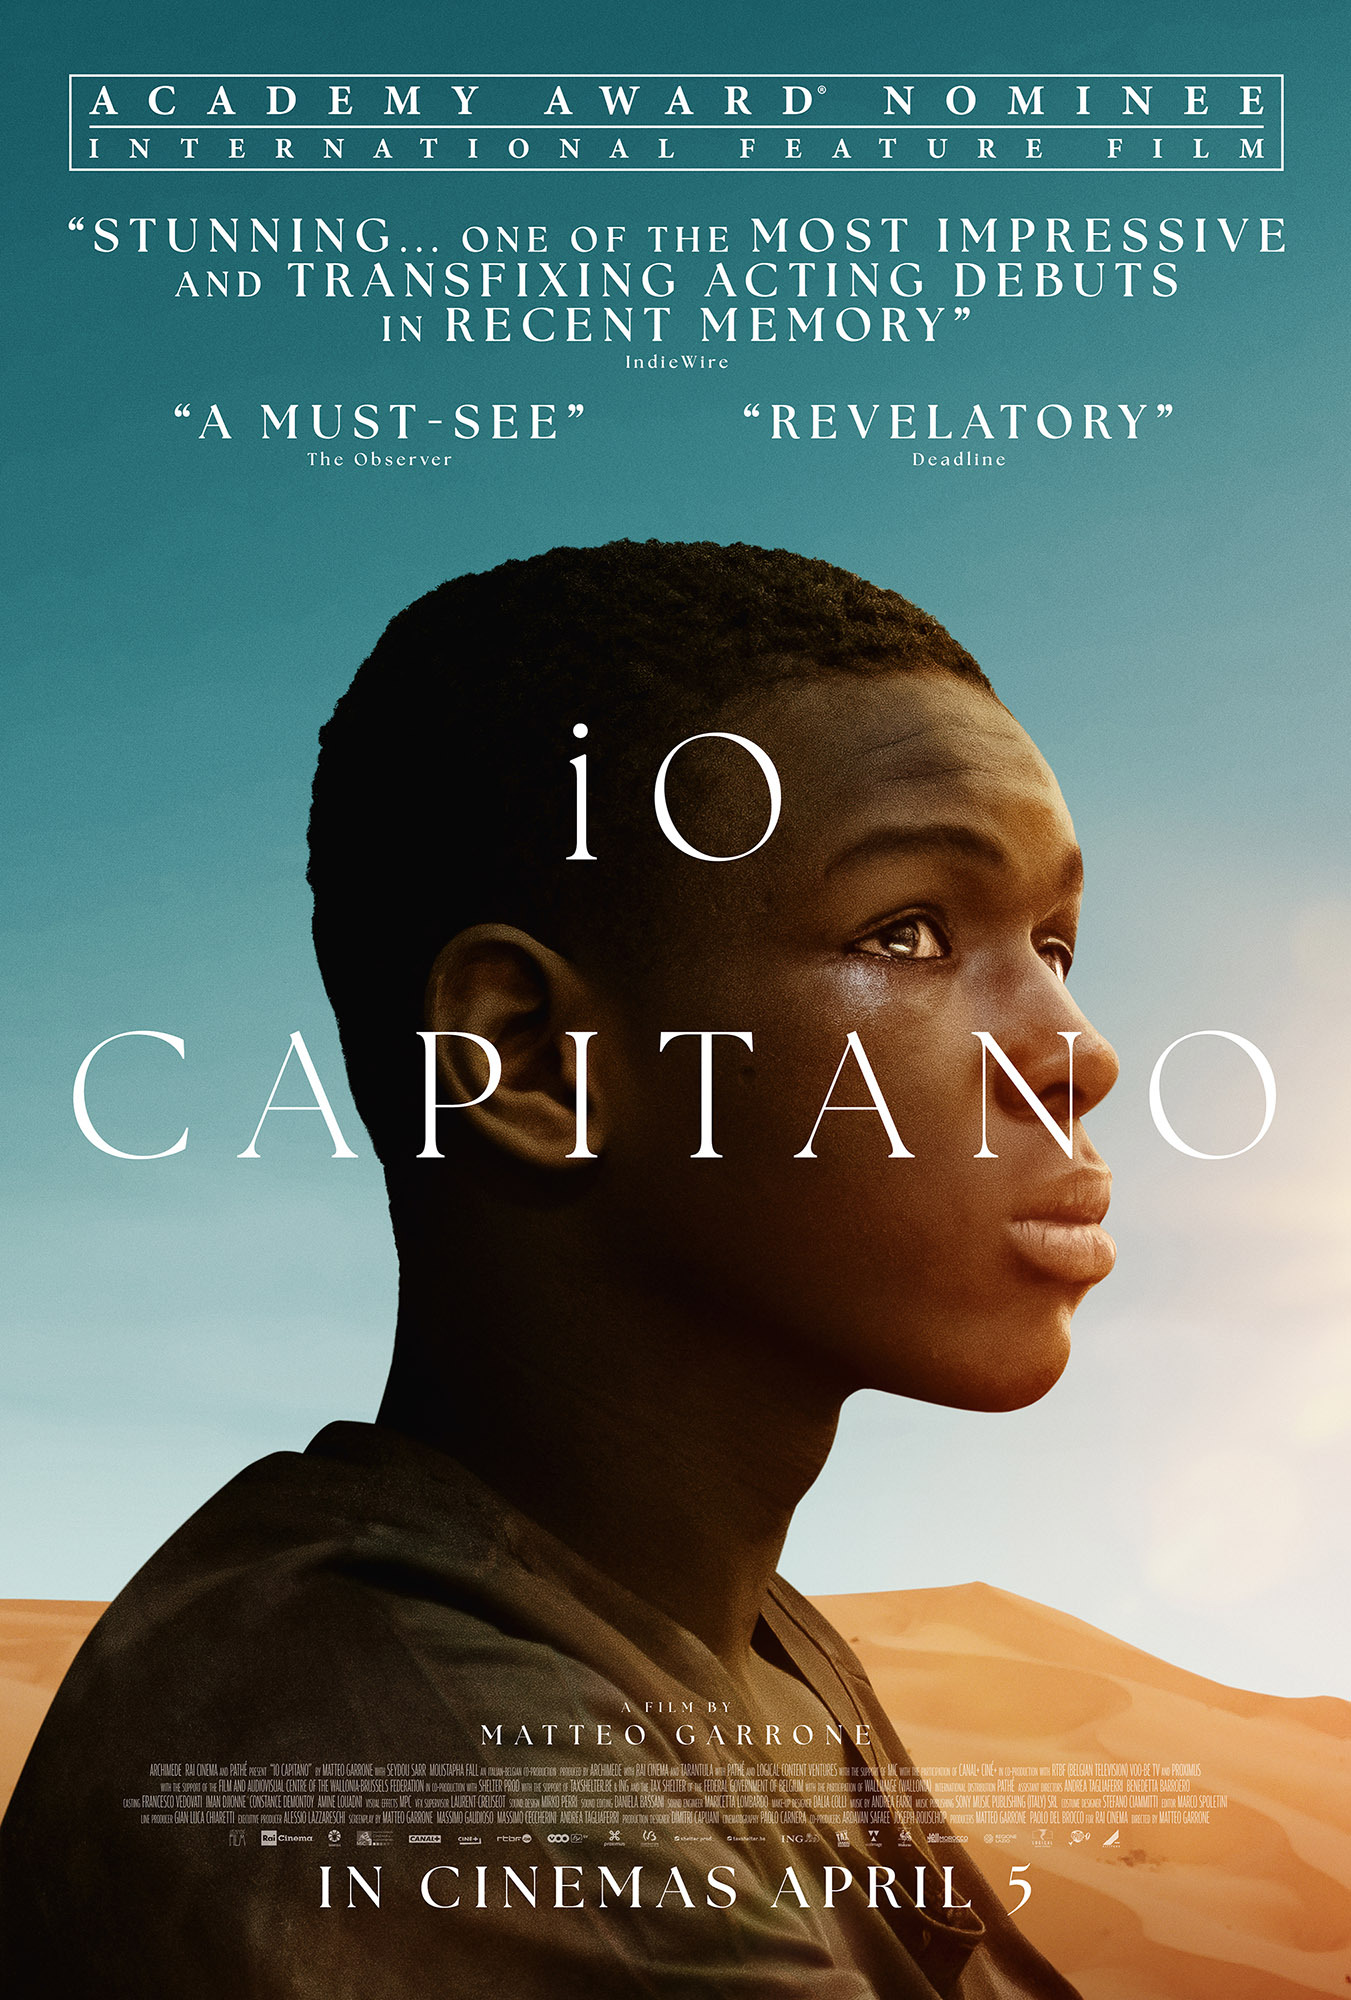 Mega Sized Movie Poster Image for Io capitano (#3 of 4)